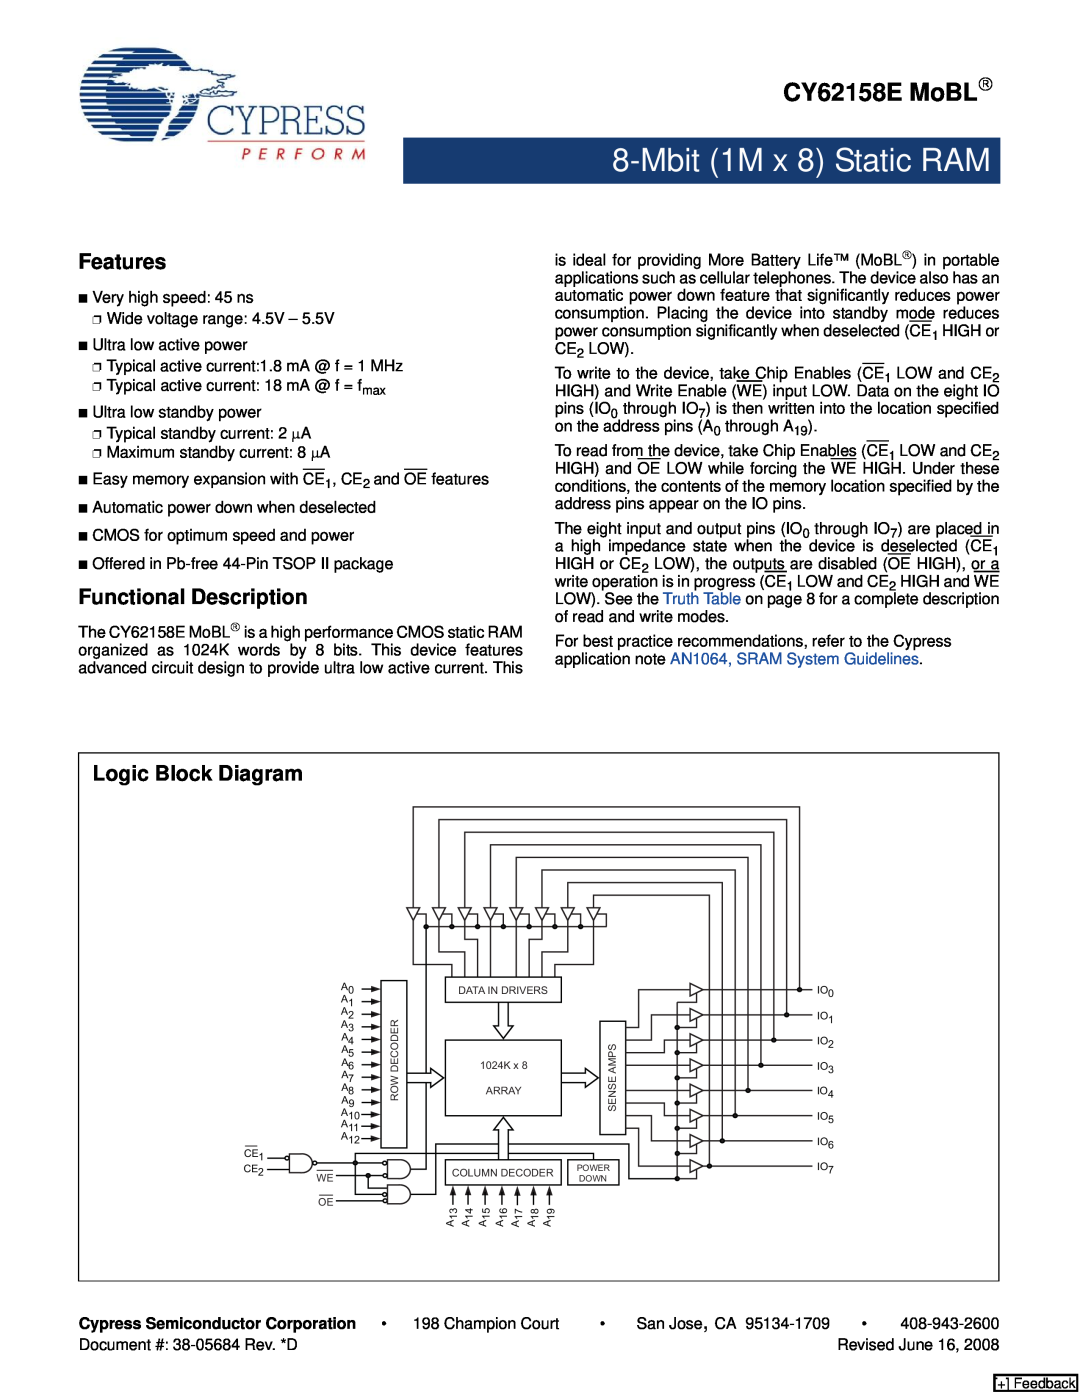 Cypress manual CY62158E MoBL→, Features, Functional Description, Logic Block Diagram, Mbit 1M x 8 Static RAM 